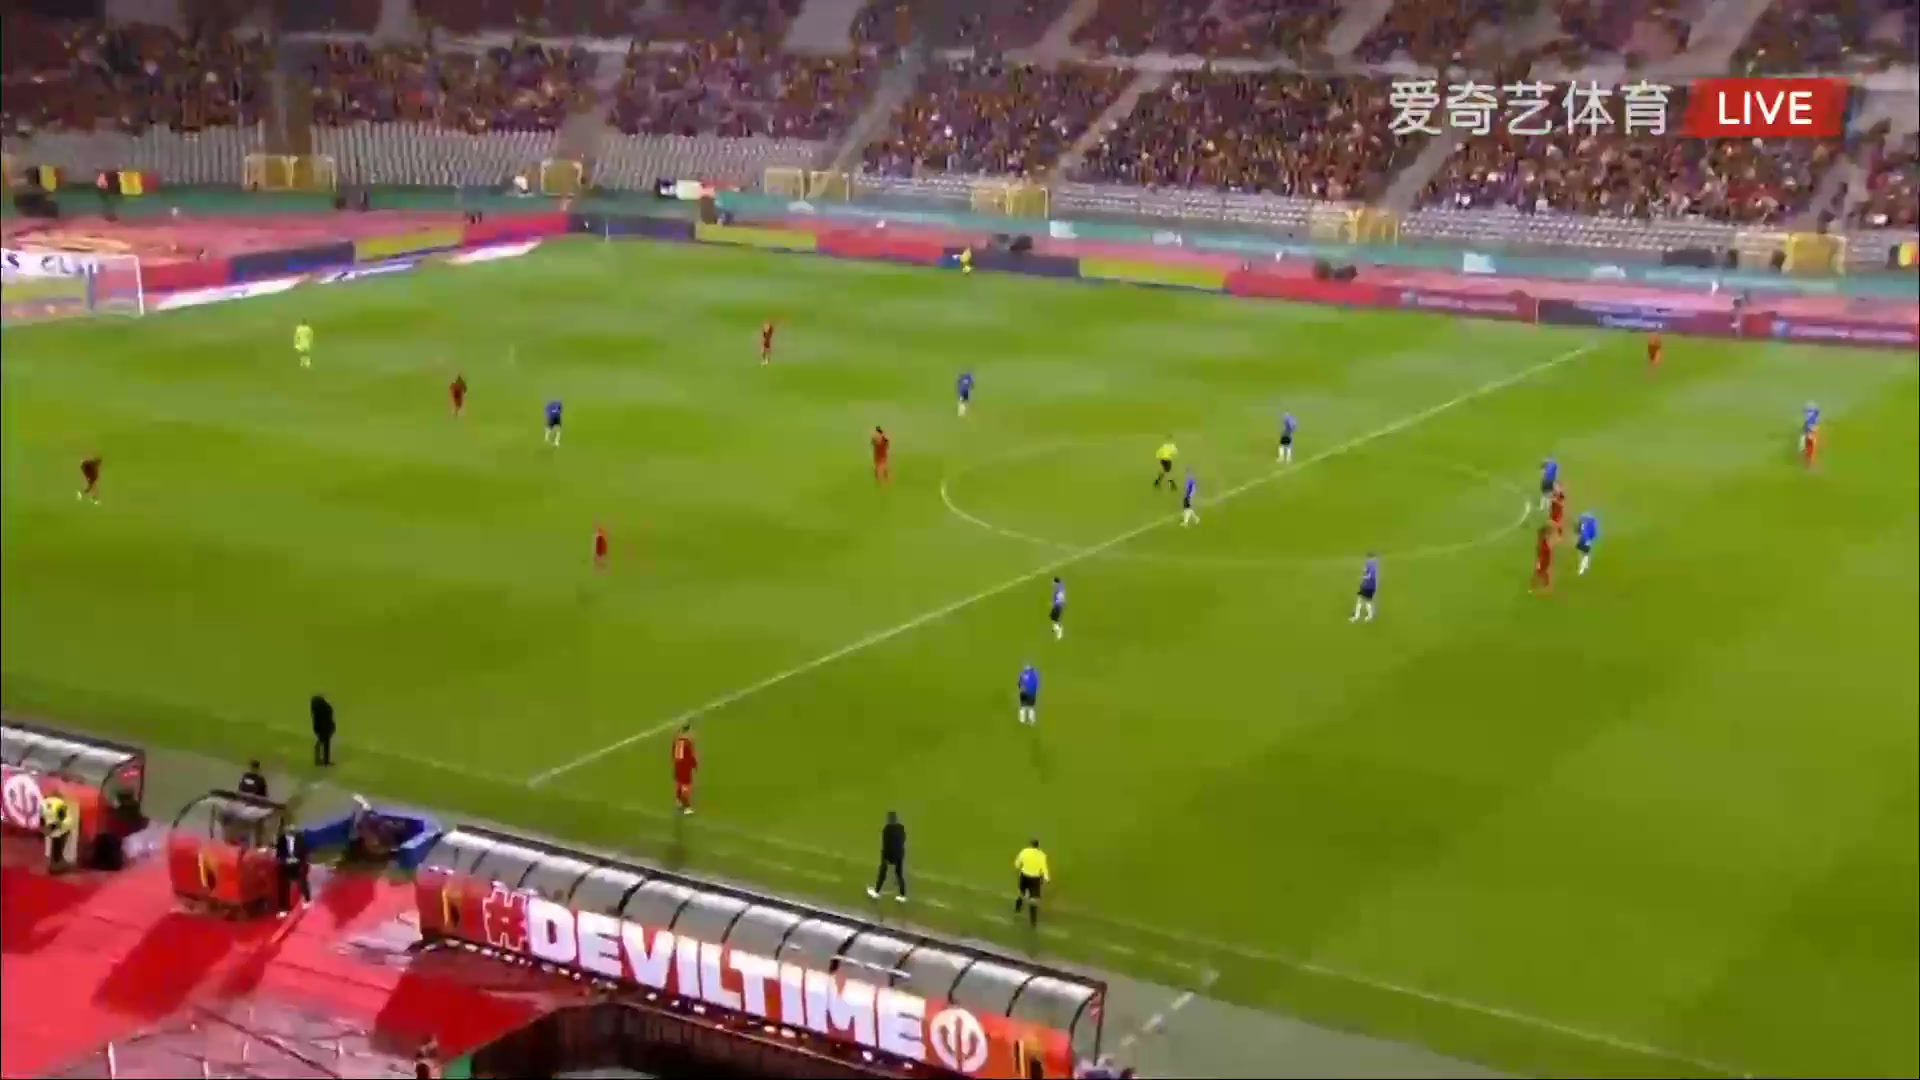 WCPEU Belgium Vs Estonia Christian Benteke Goal in 9 min, Score 1:0